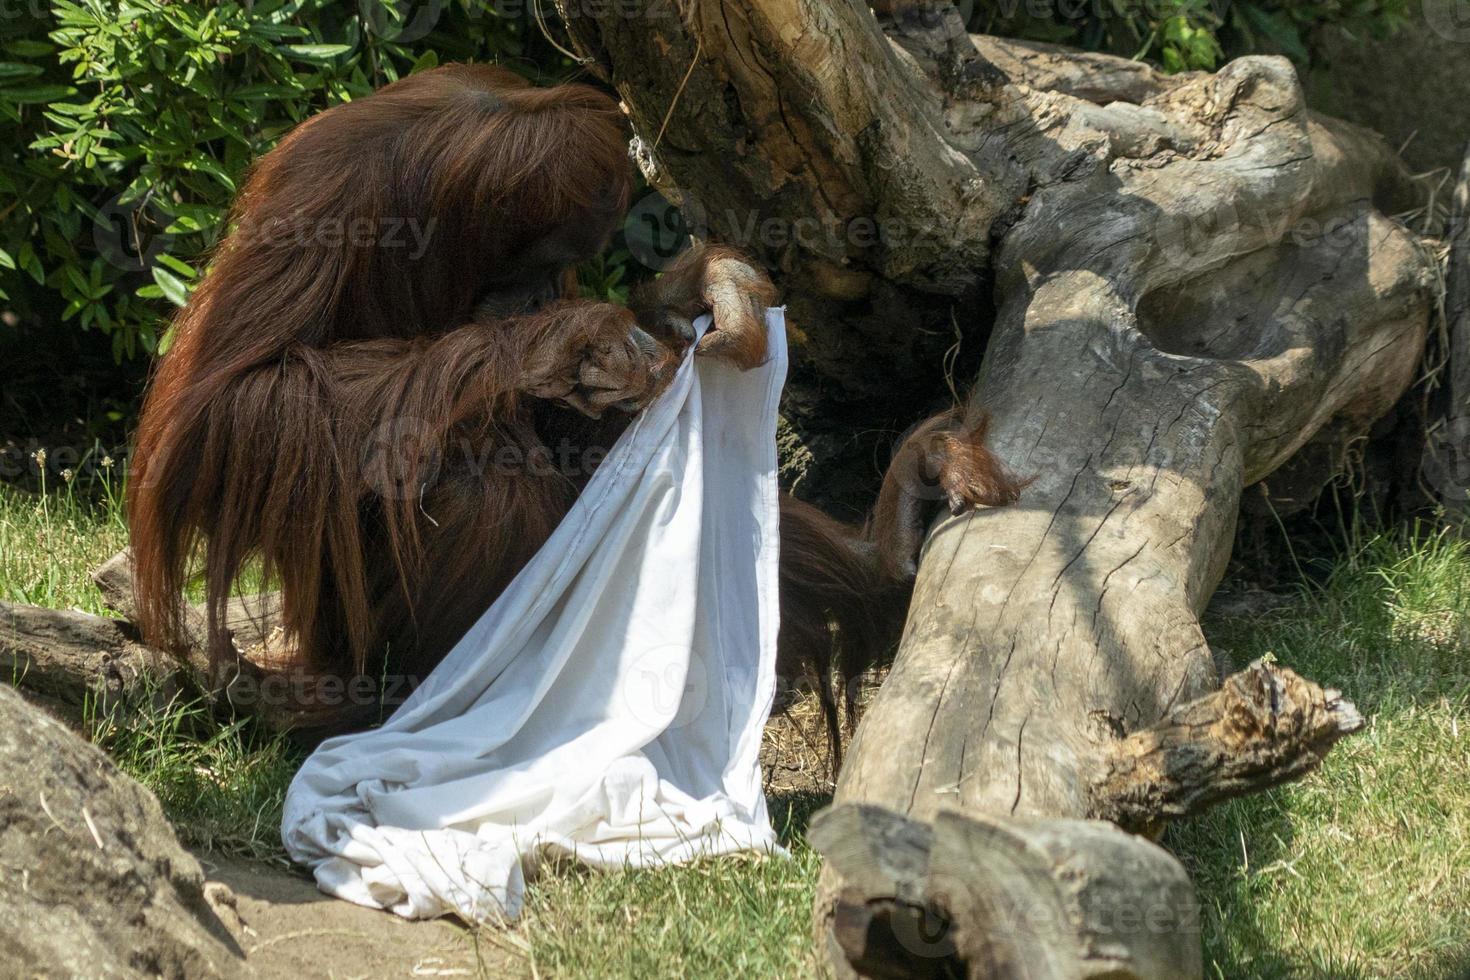 Zooo monkey orang utan ape playing ghost with bed sheet photo